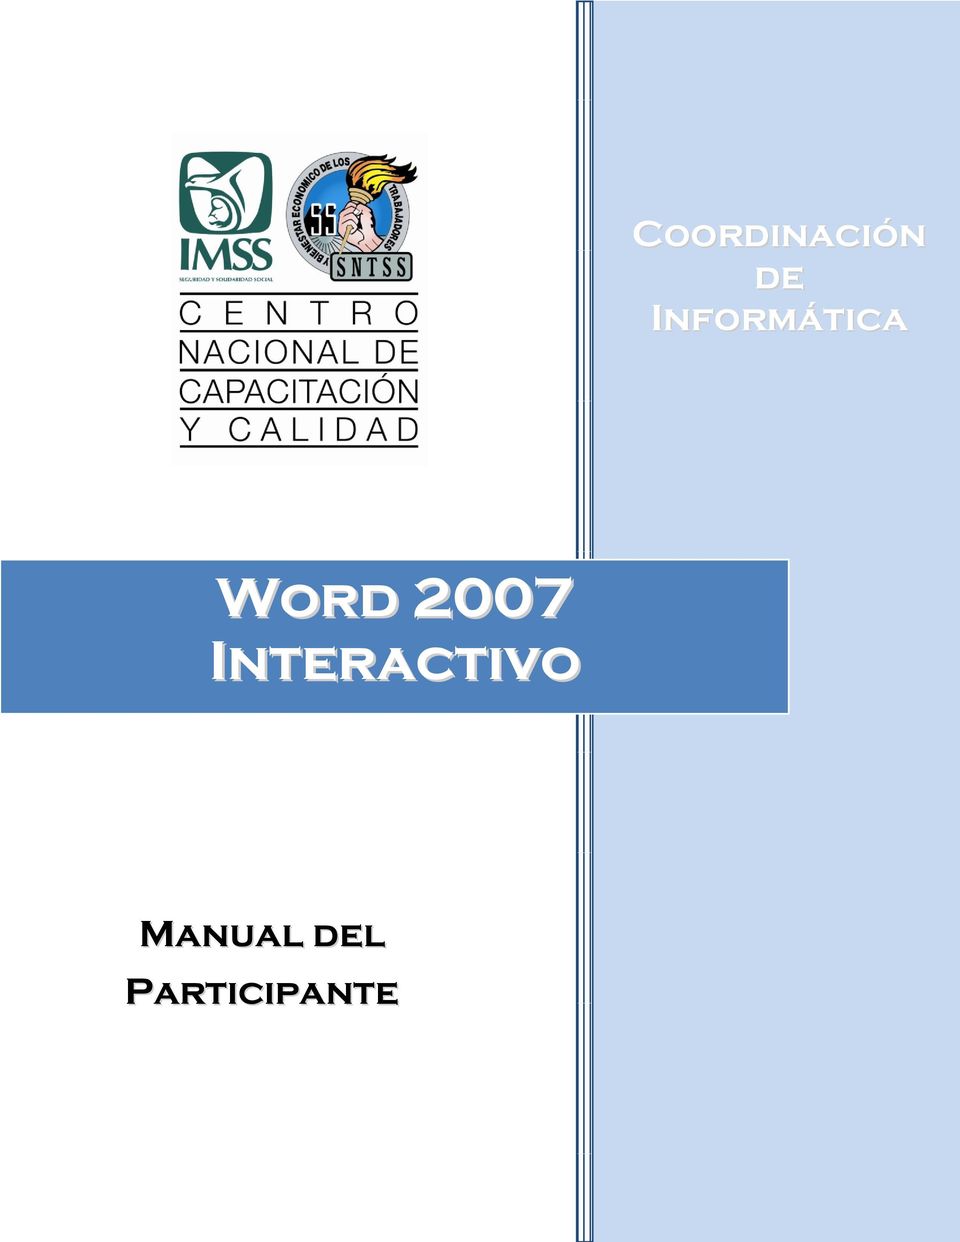 2007 Interactivo